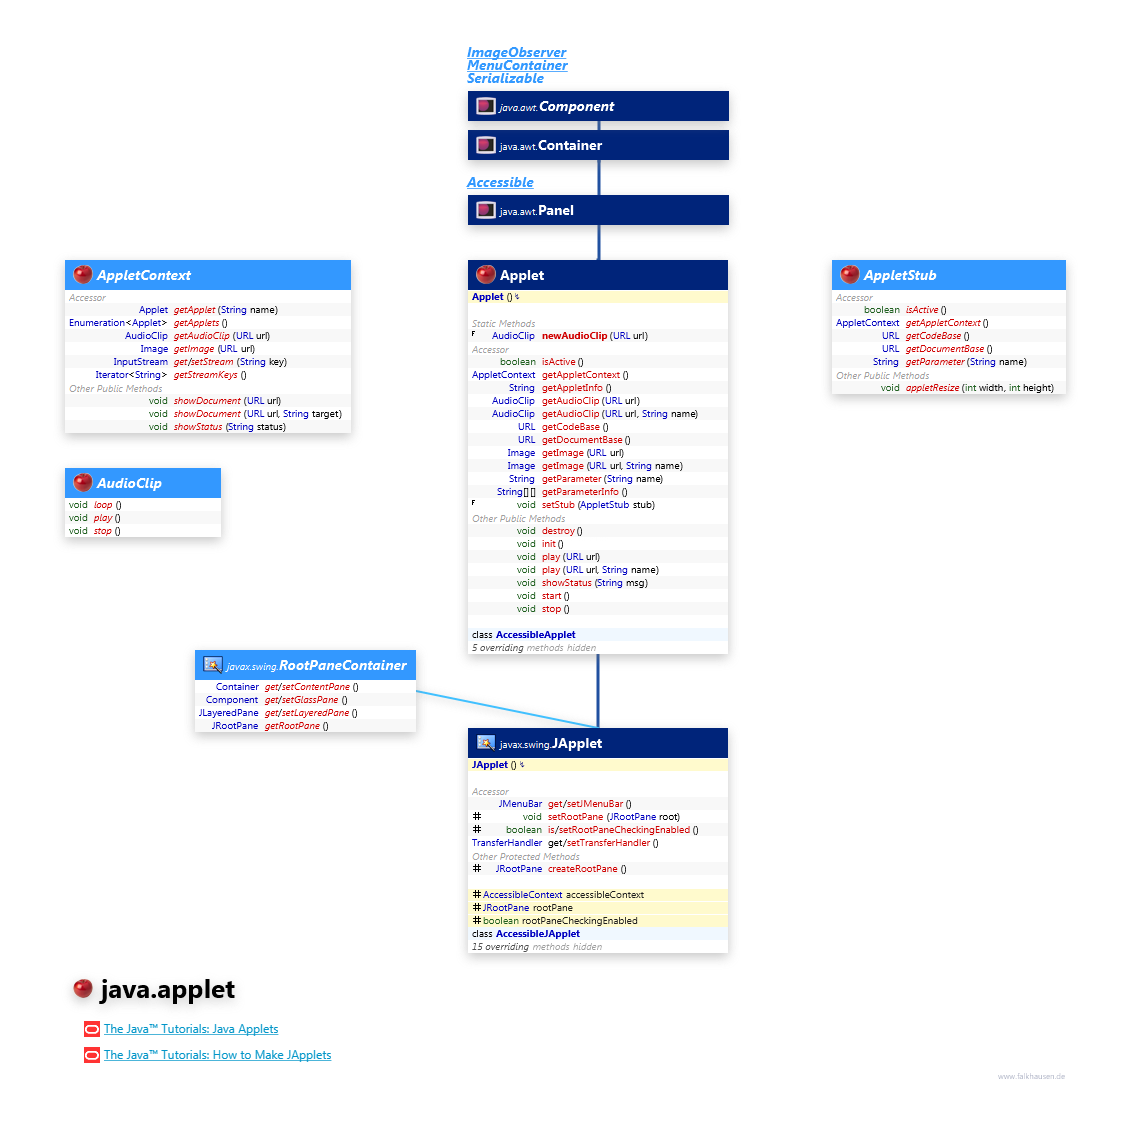 java.applet class diagram and api documentation for Java 7